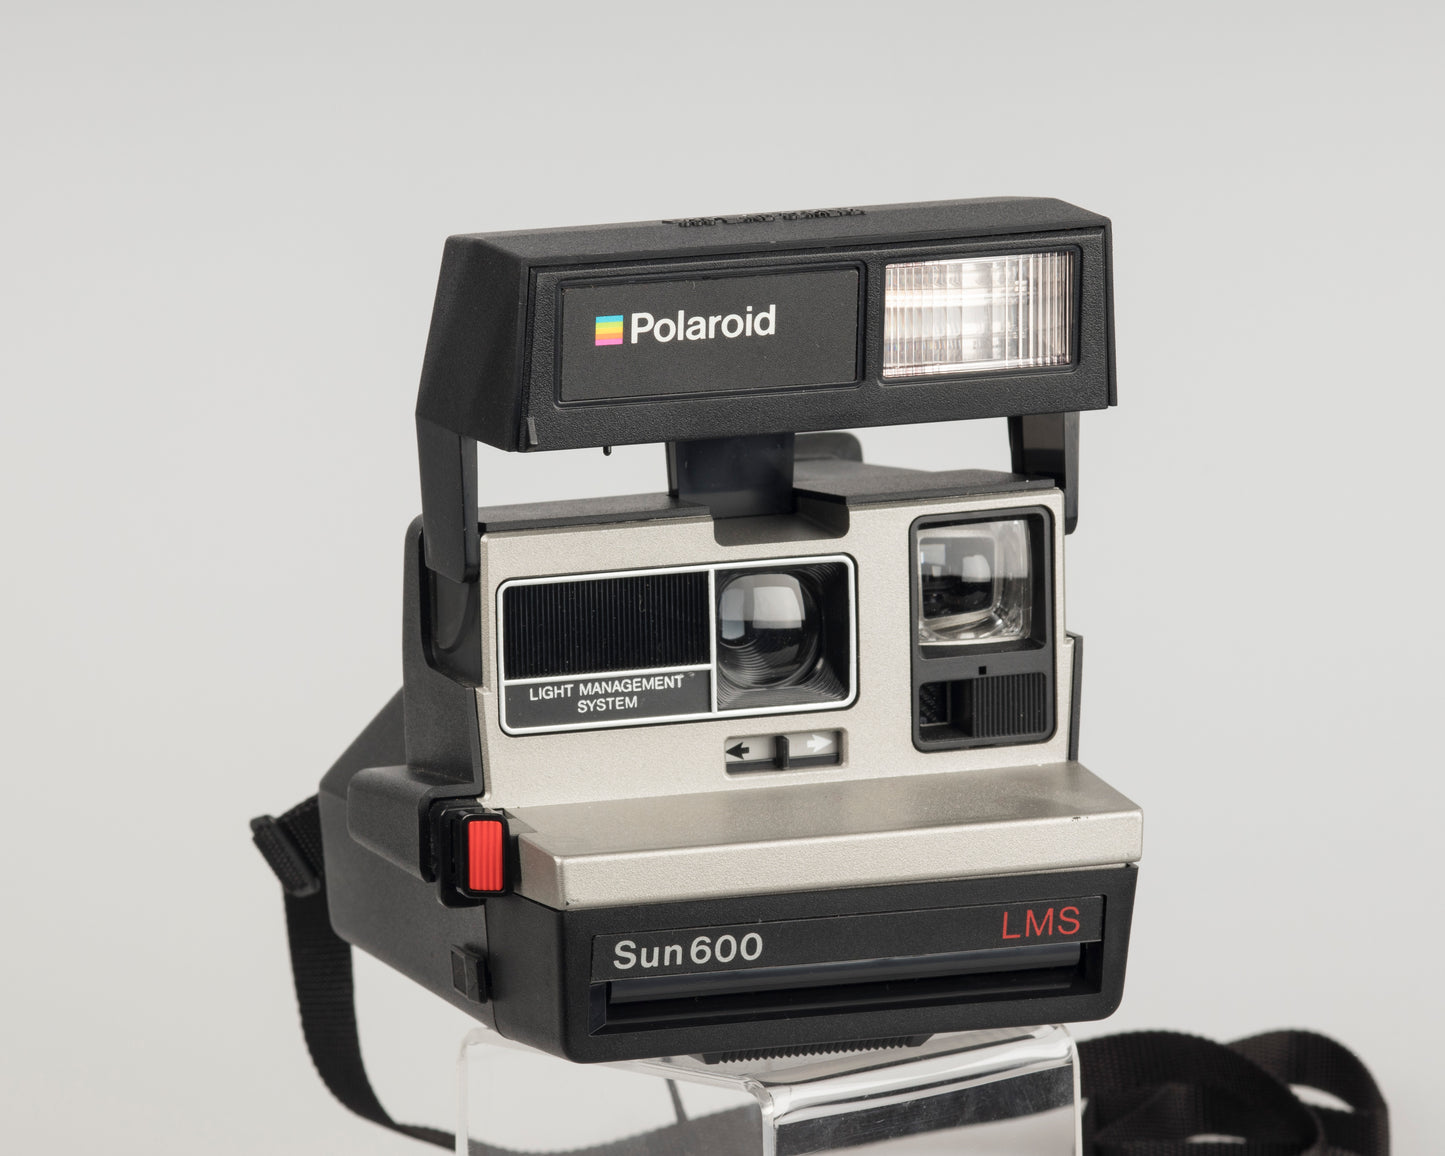 Appareil photo instantané Polaroid Sun 600 LMS